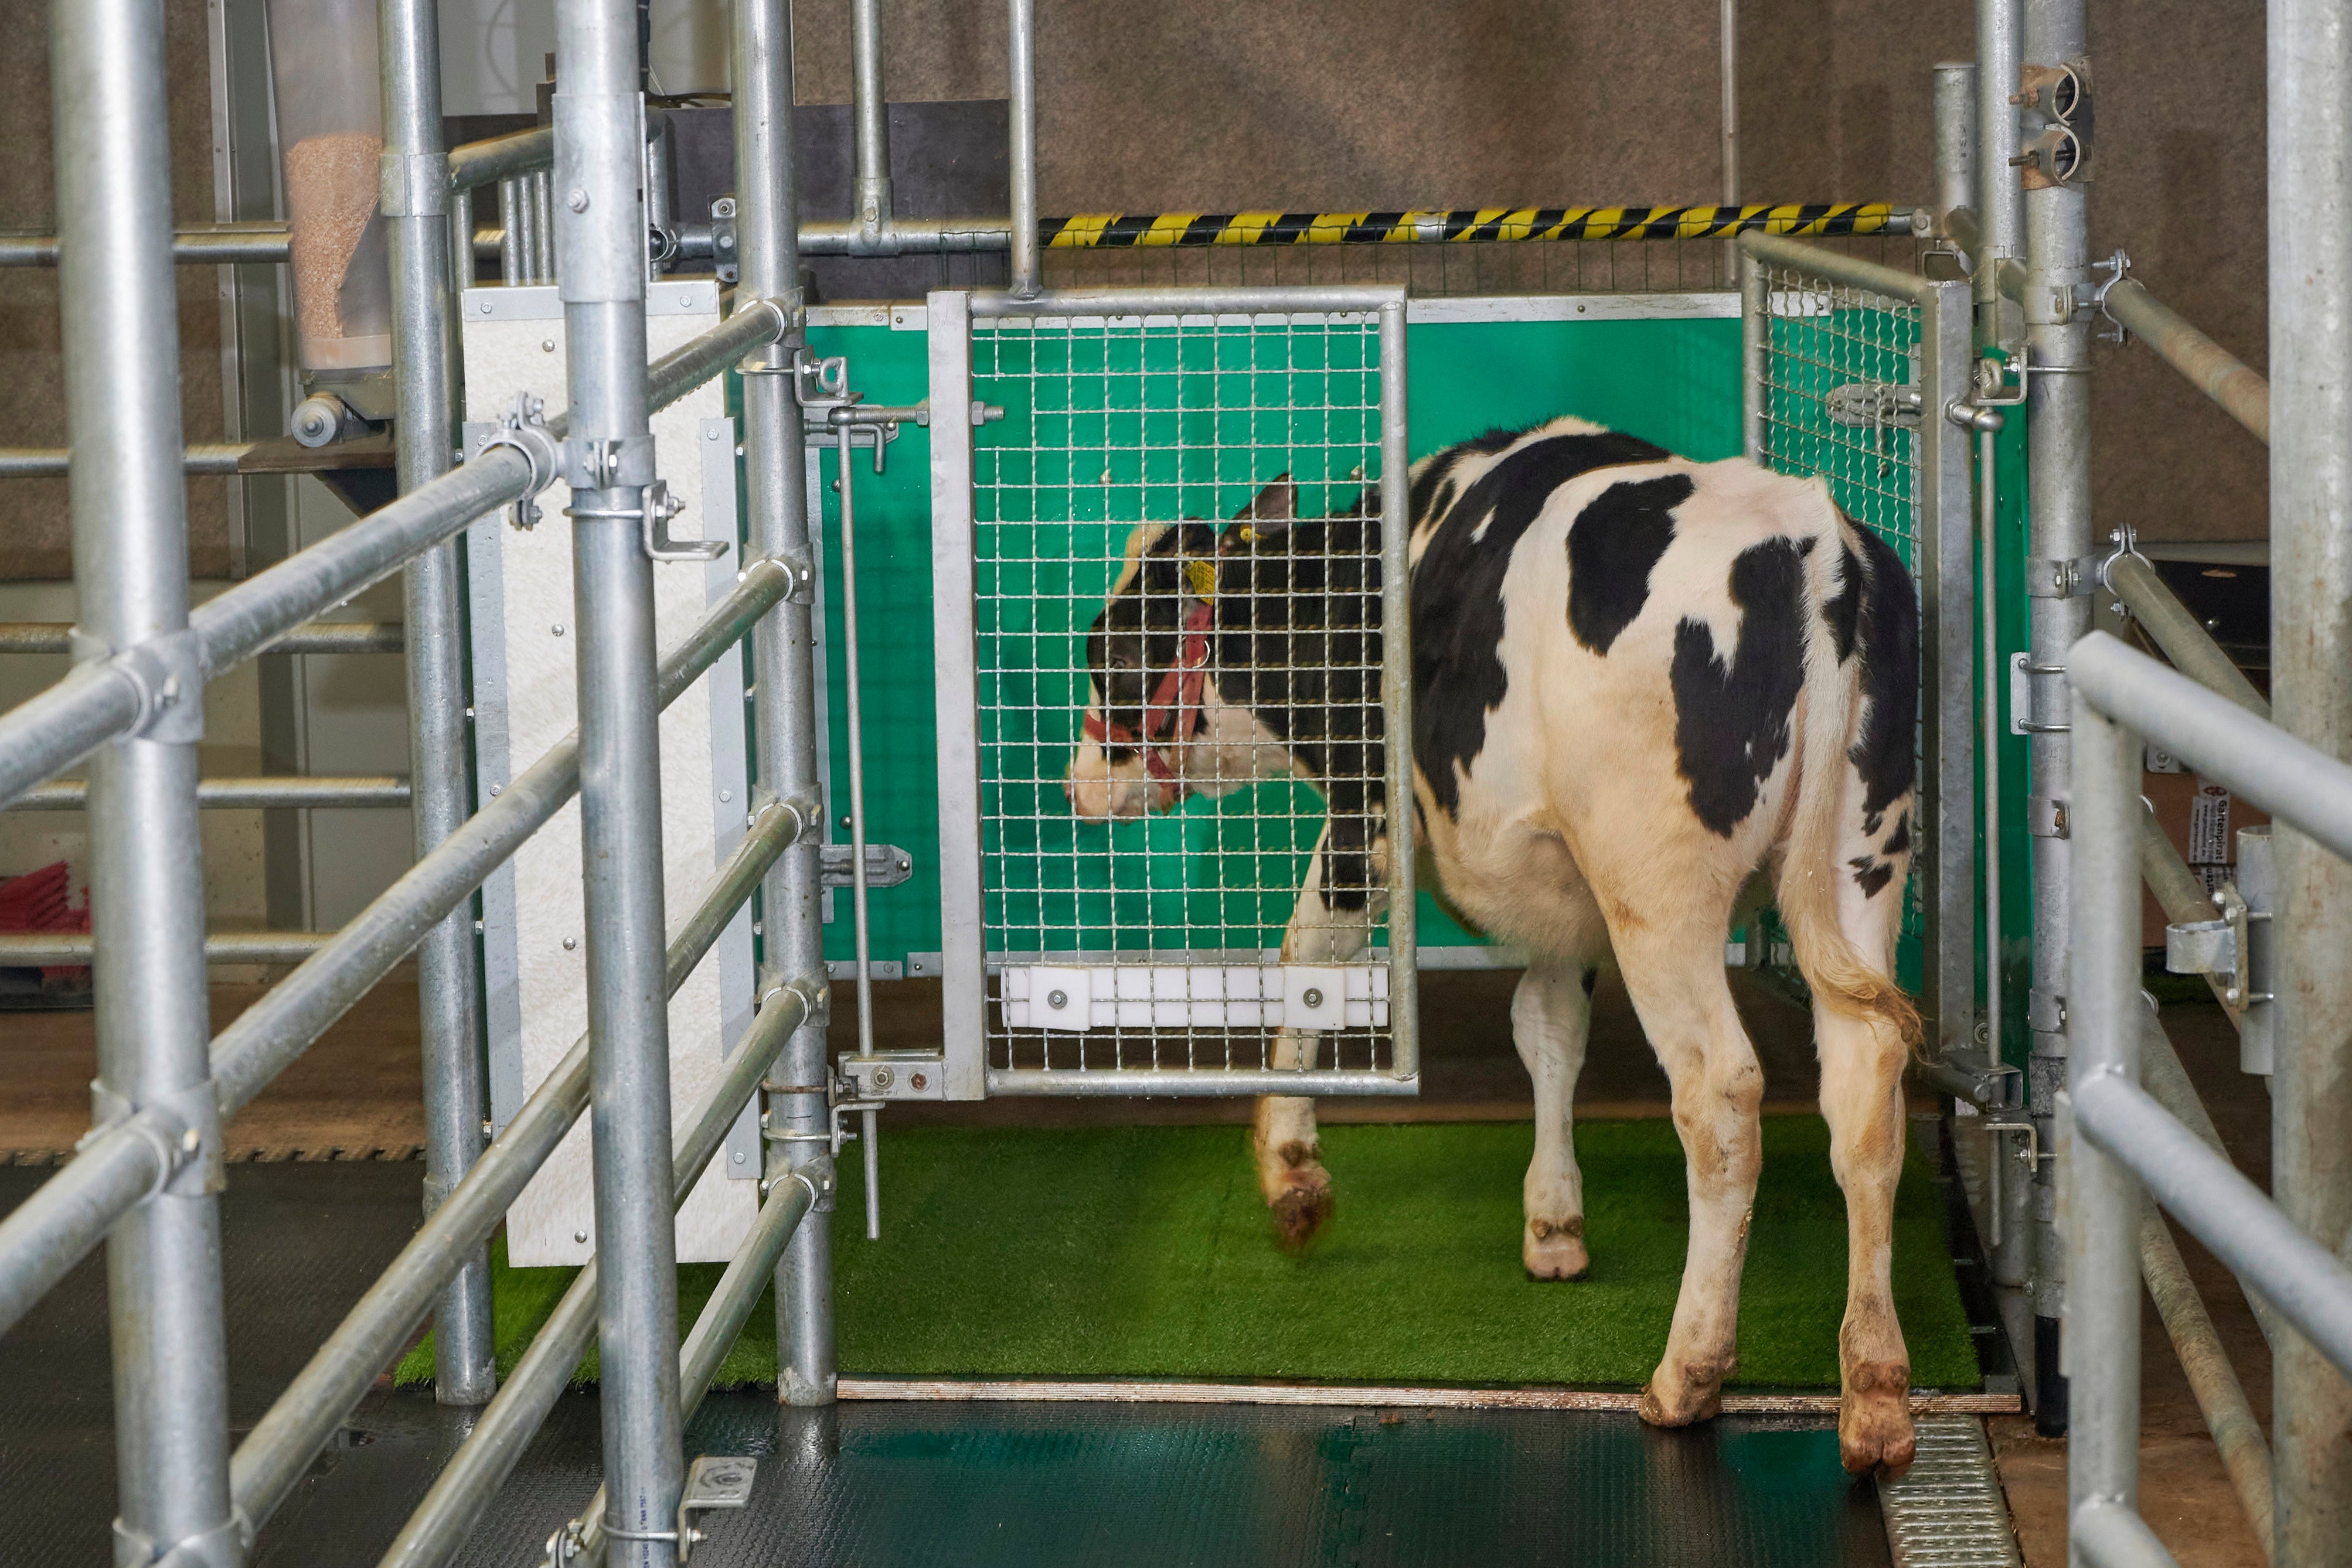 Toilet Training Cows